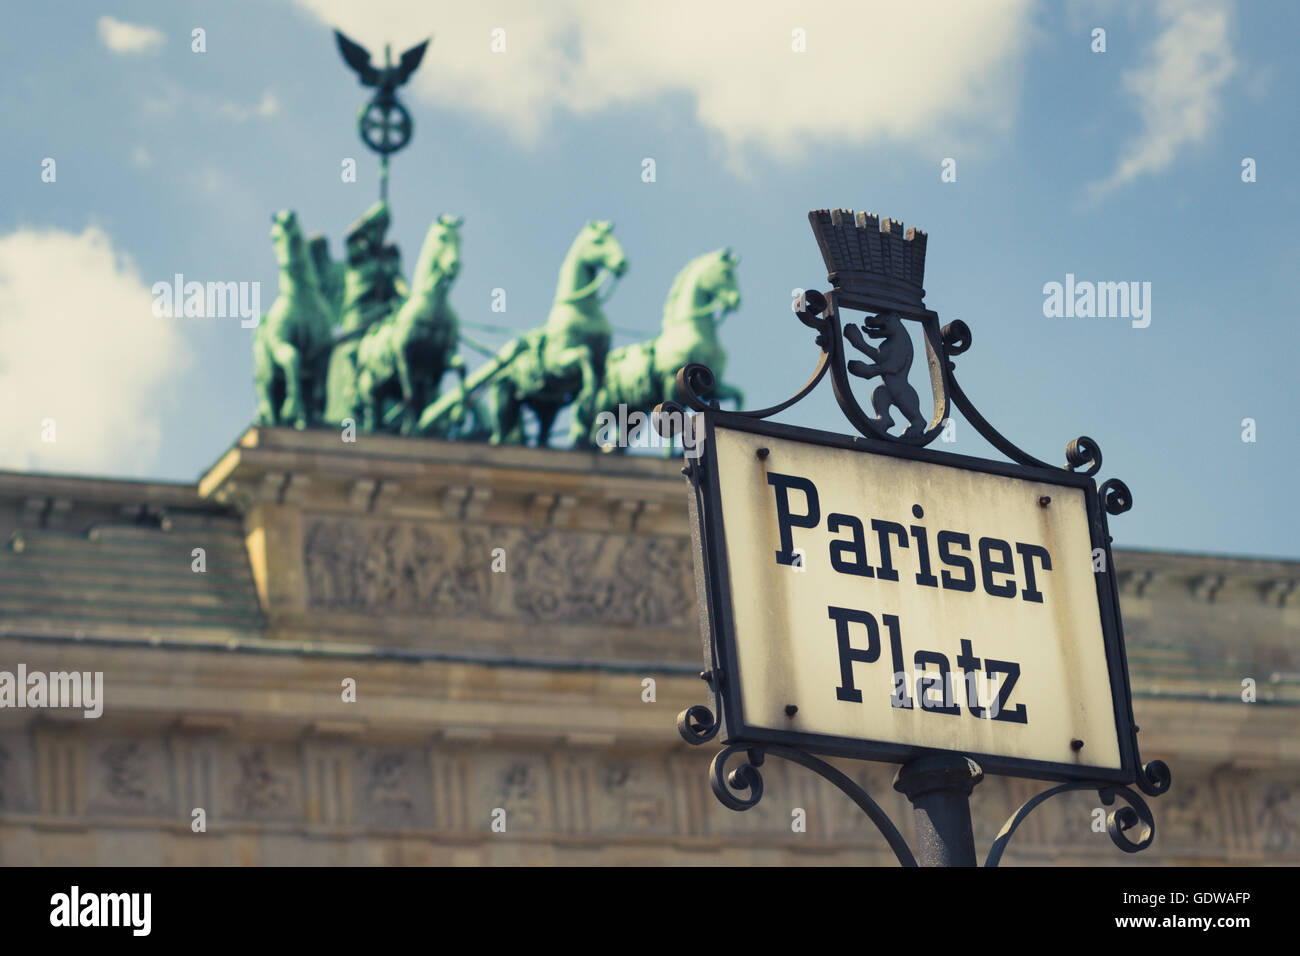 Pariser Platz street sign and brandenburg gate - vintage filter Stock Photo